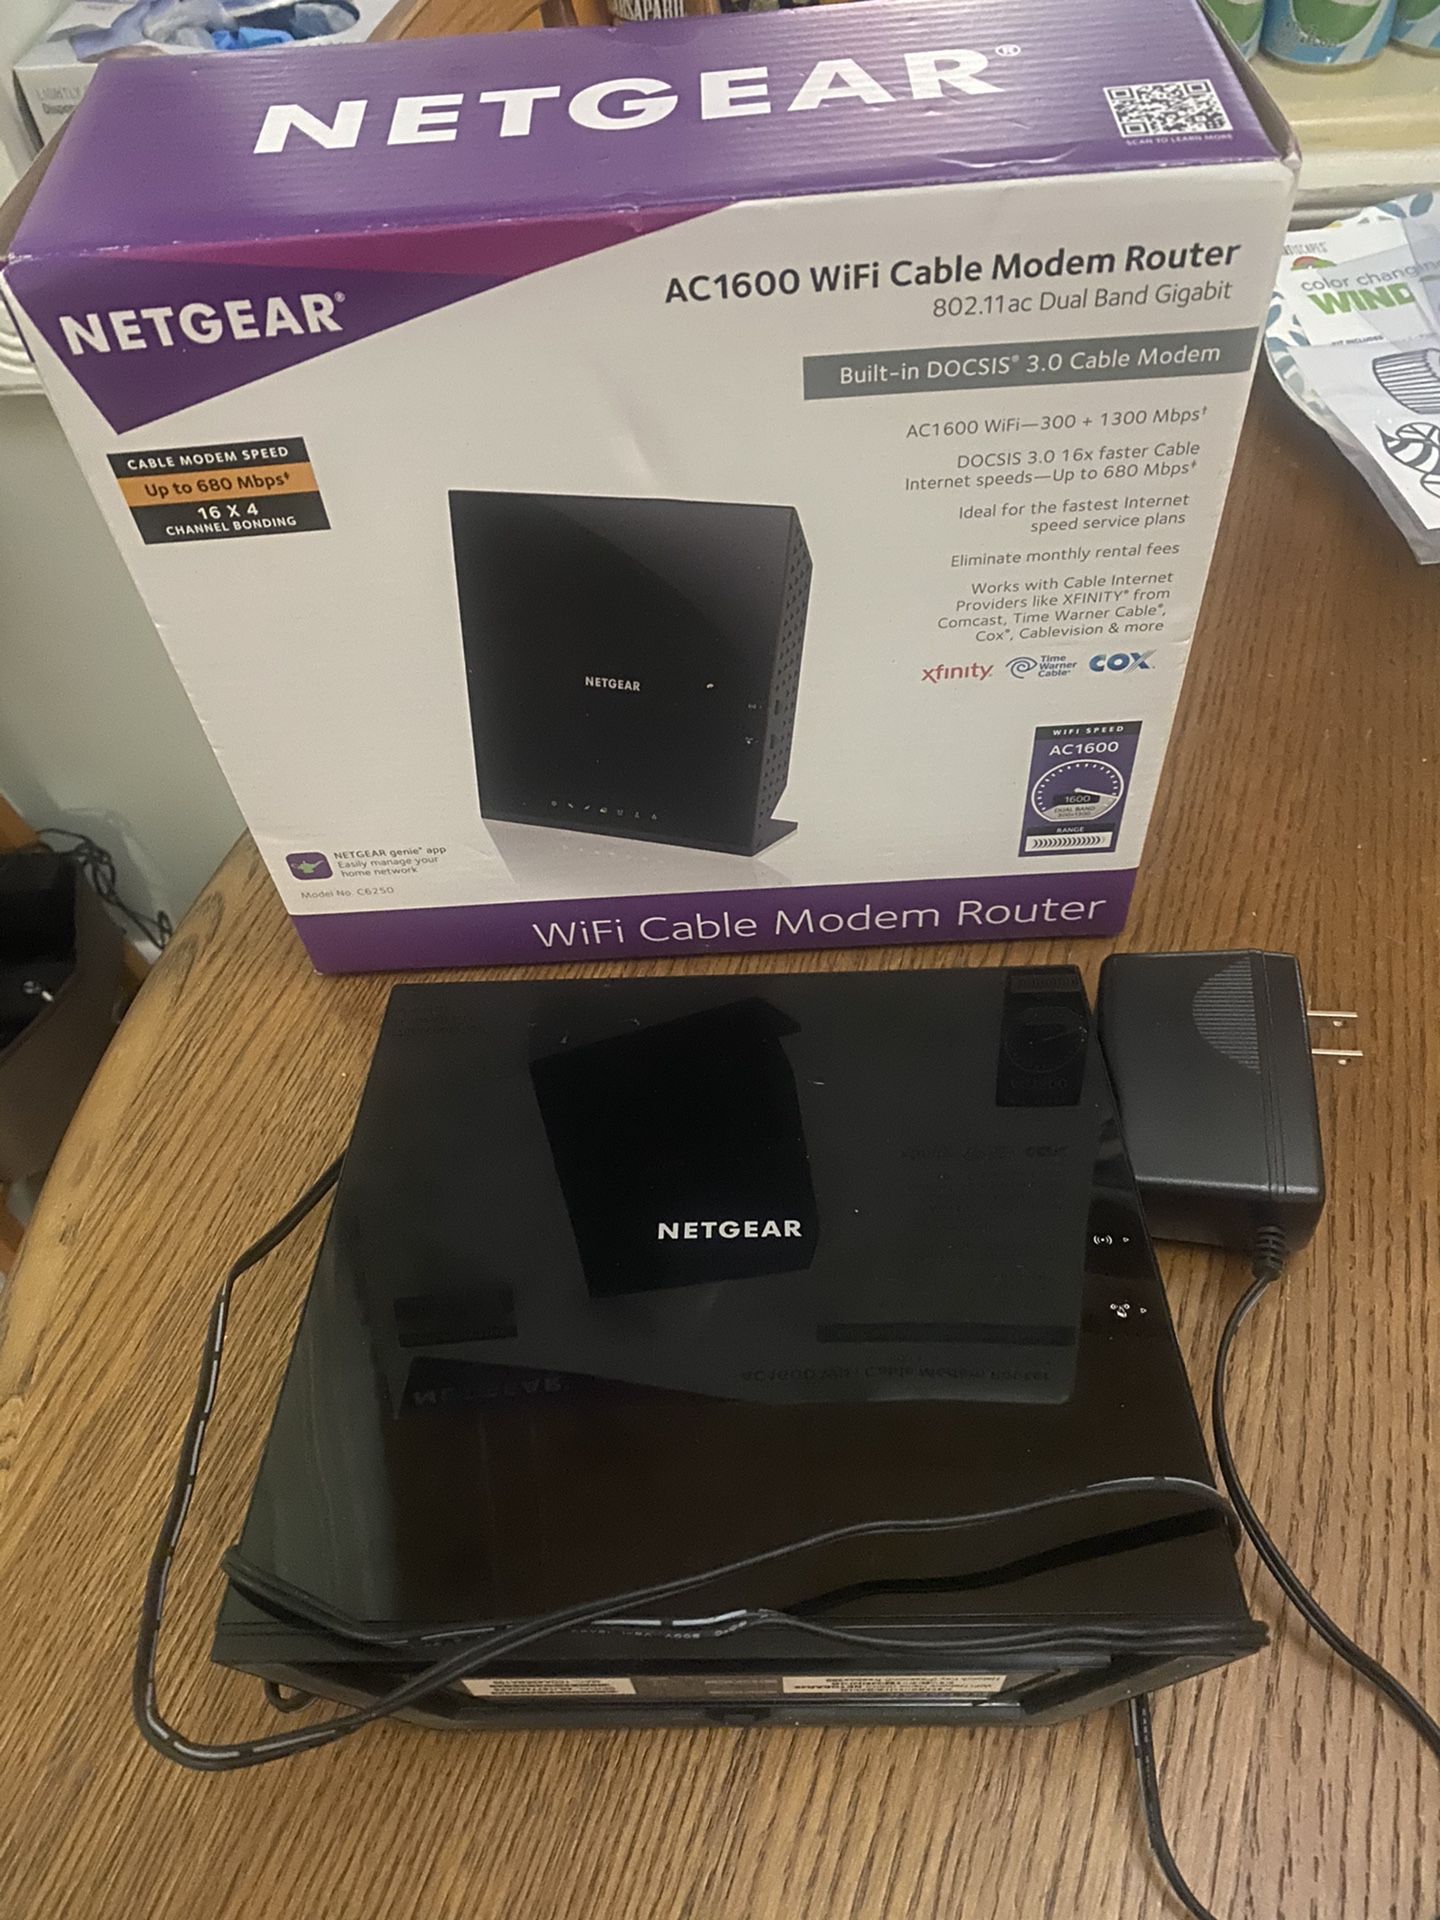 Netgear AC1600 wifi cable modem router